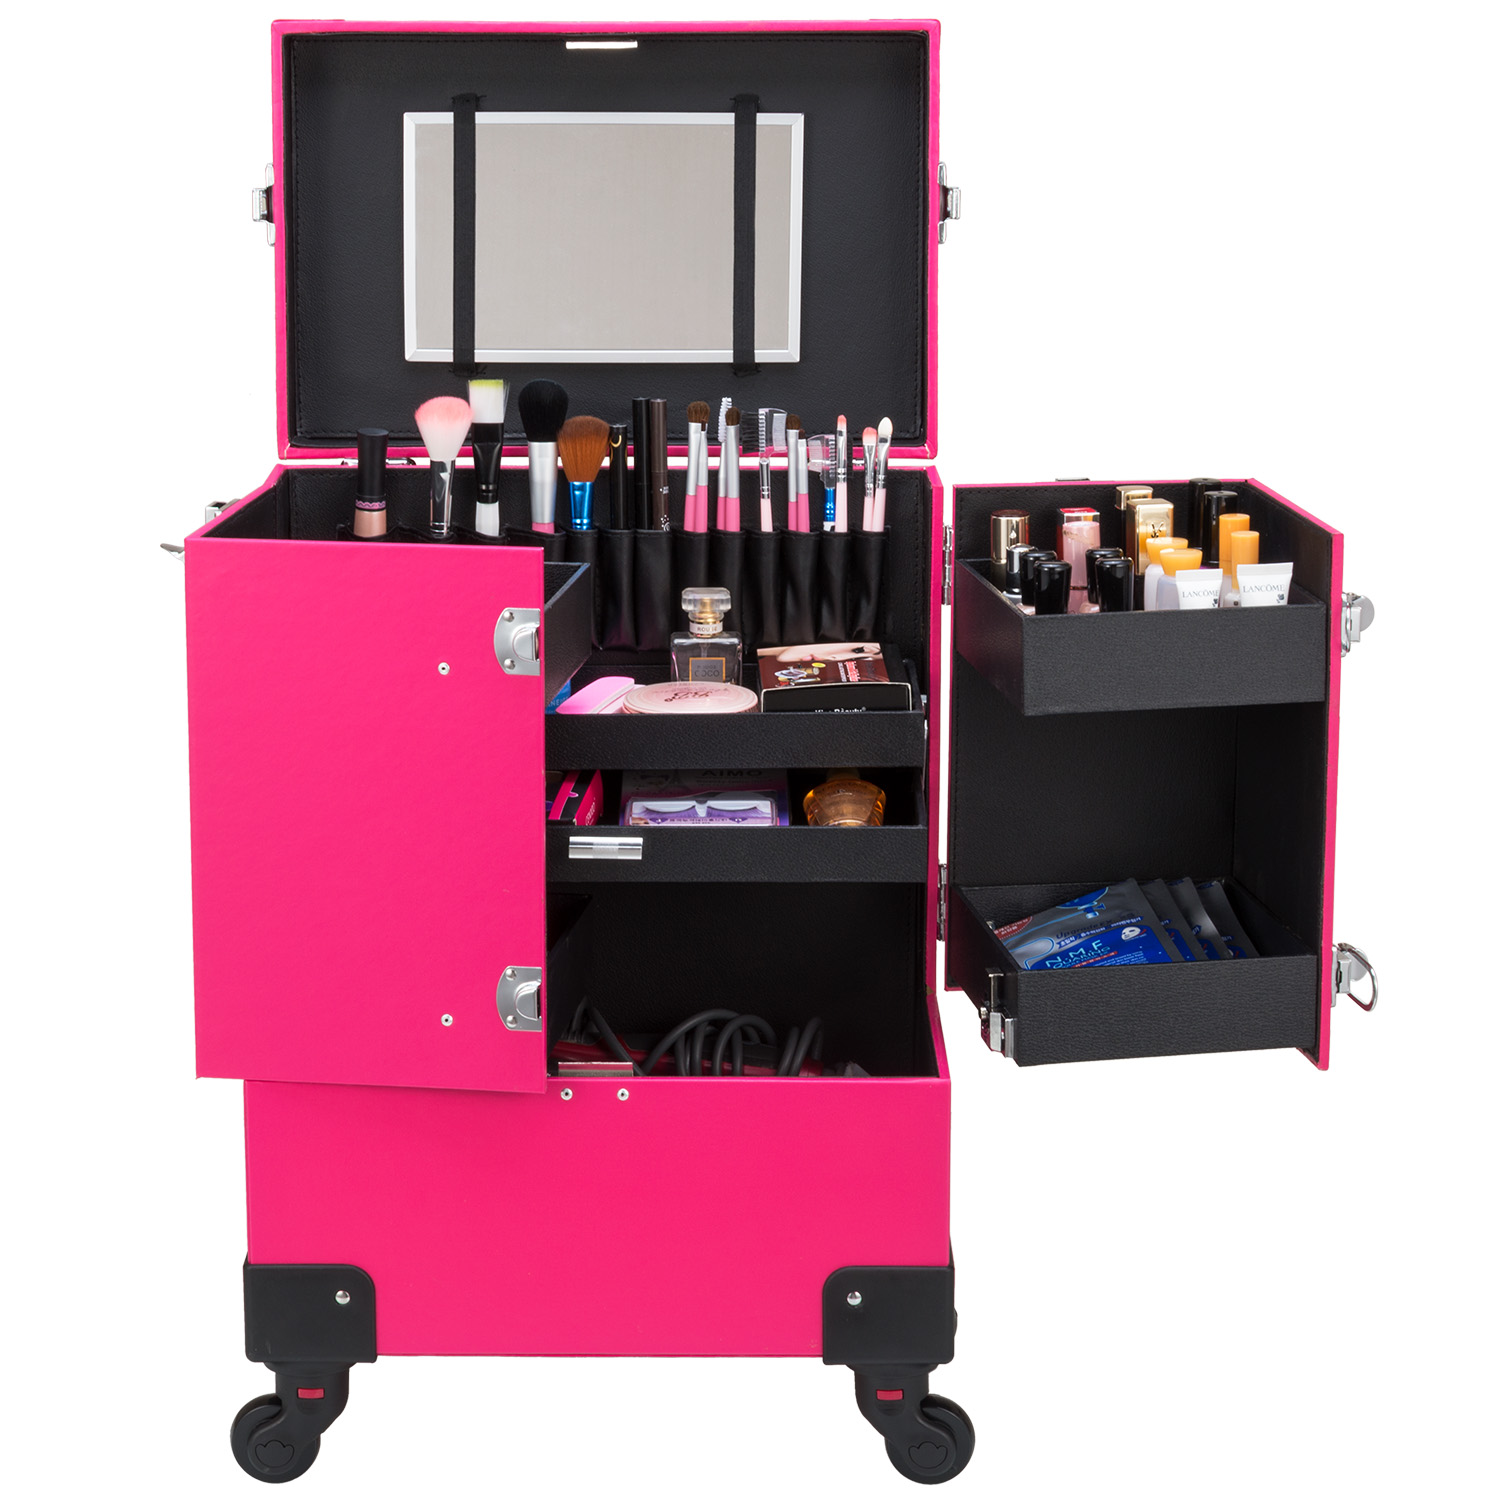 Ollieroo Rolling Wheels Makeup Train Case Lockable PU Artist Makeup Cosmetic Train Case,Rose-Pink - image 5 of 9